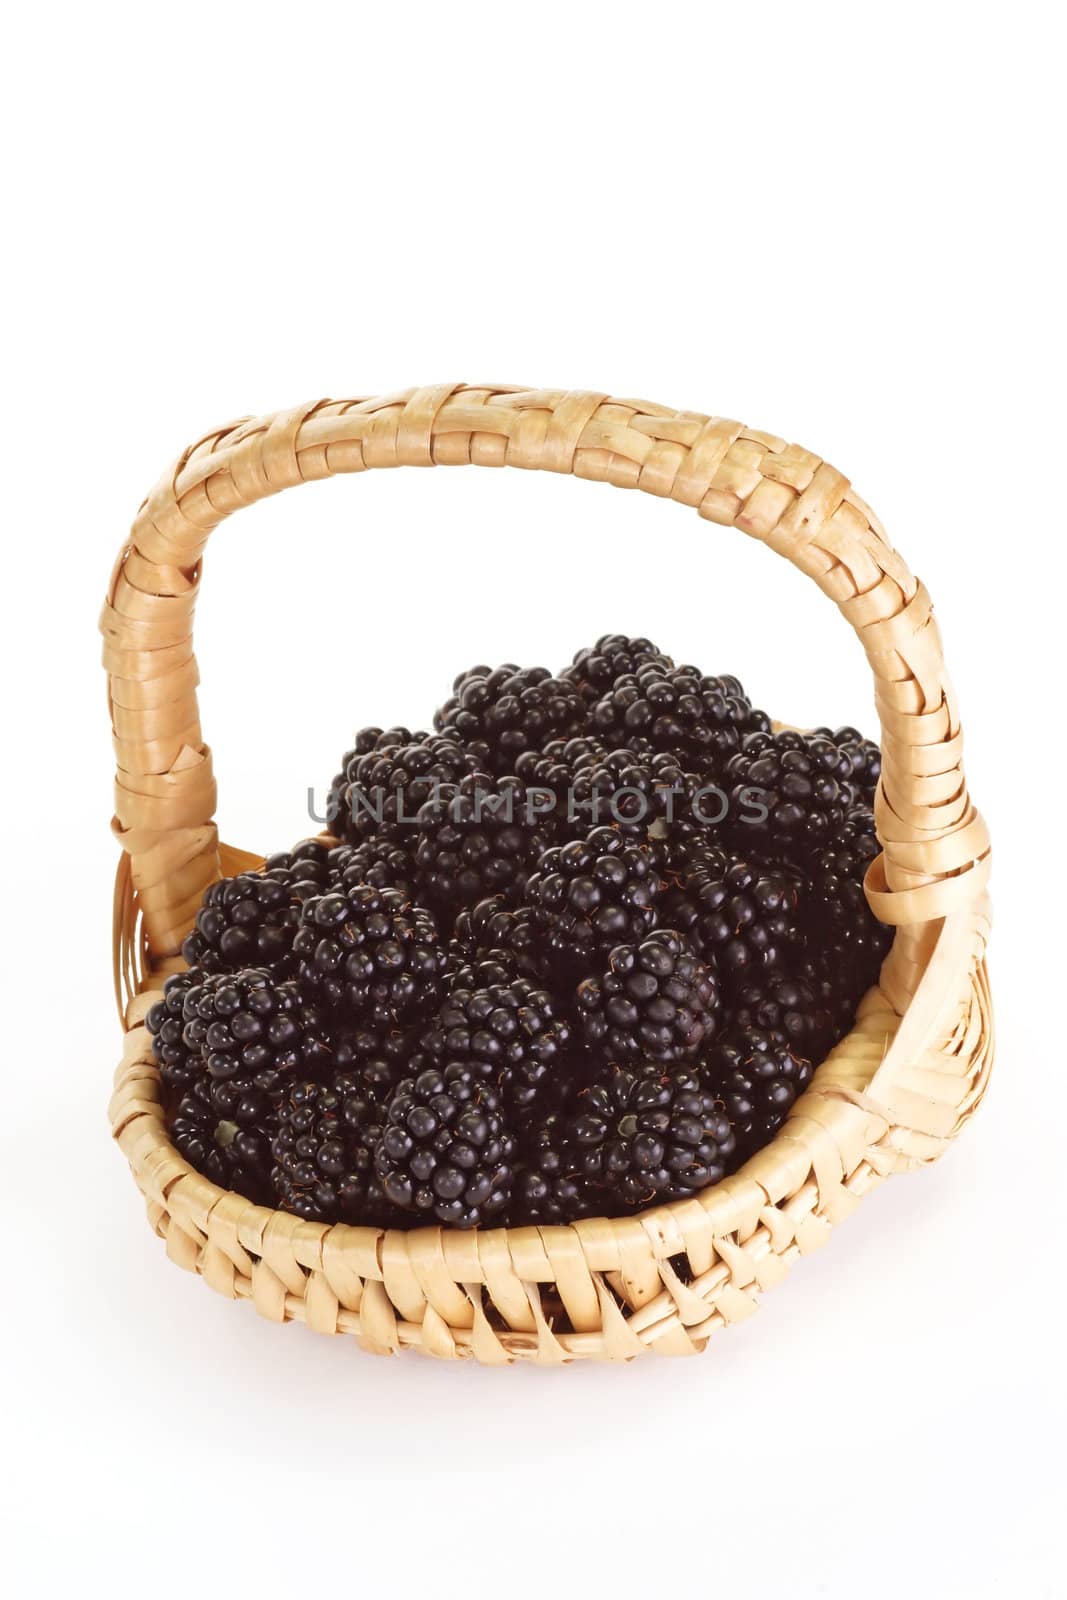 Fresh blackberries in a basket on bright background